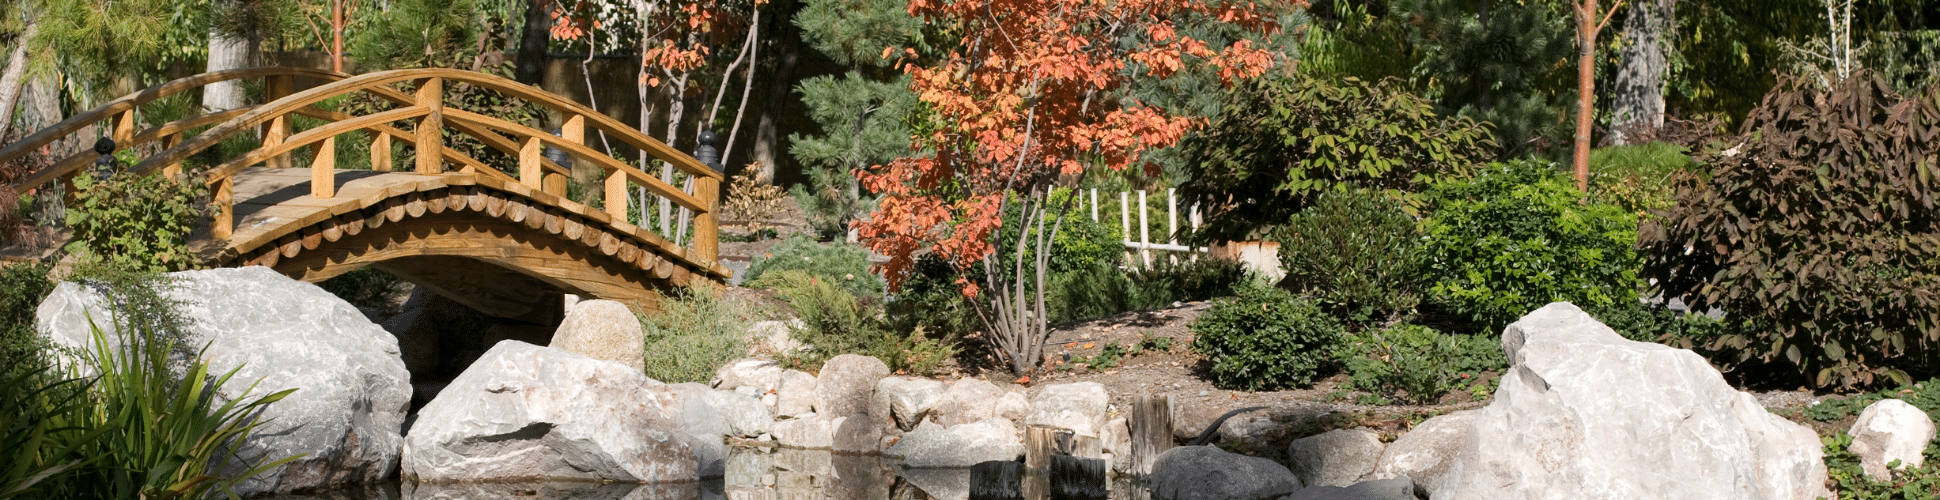 Asian garden featuring rocks, bridge, water, and maple tree